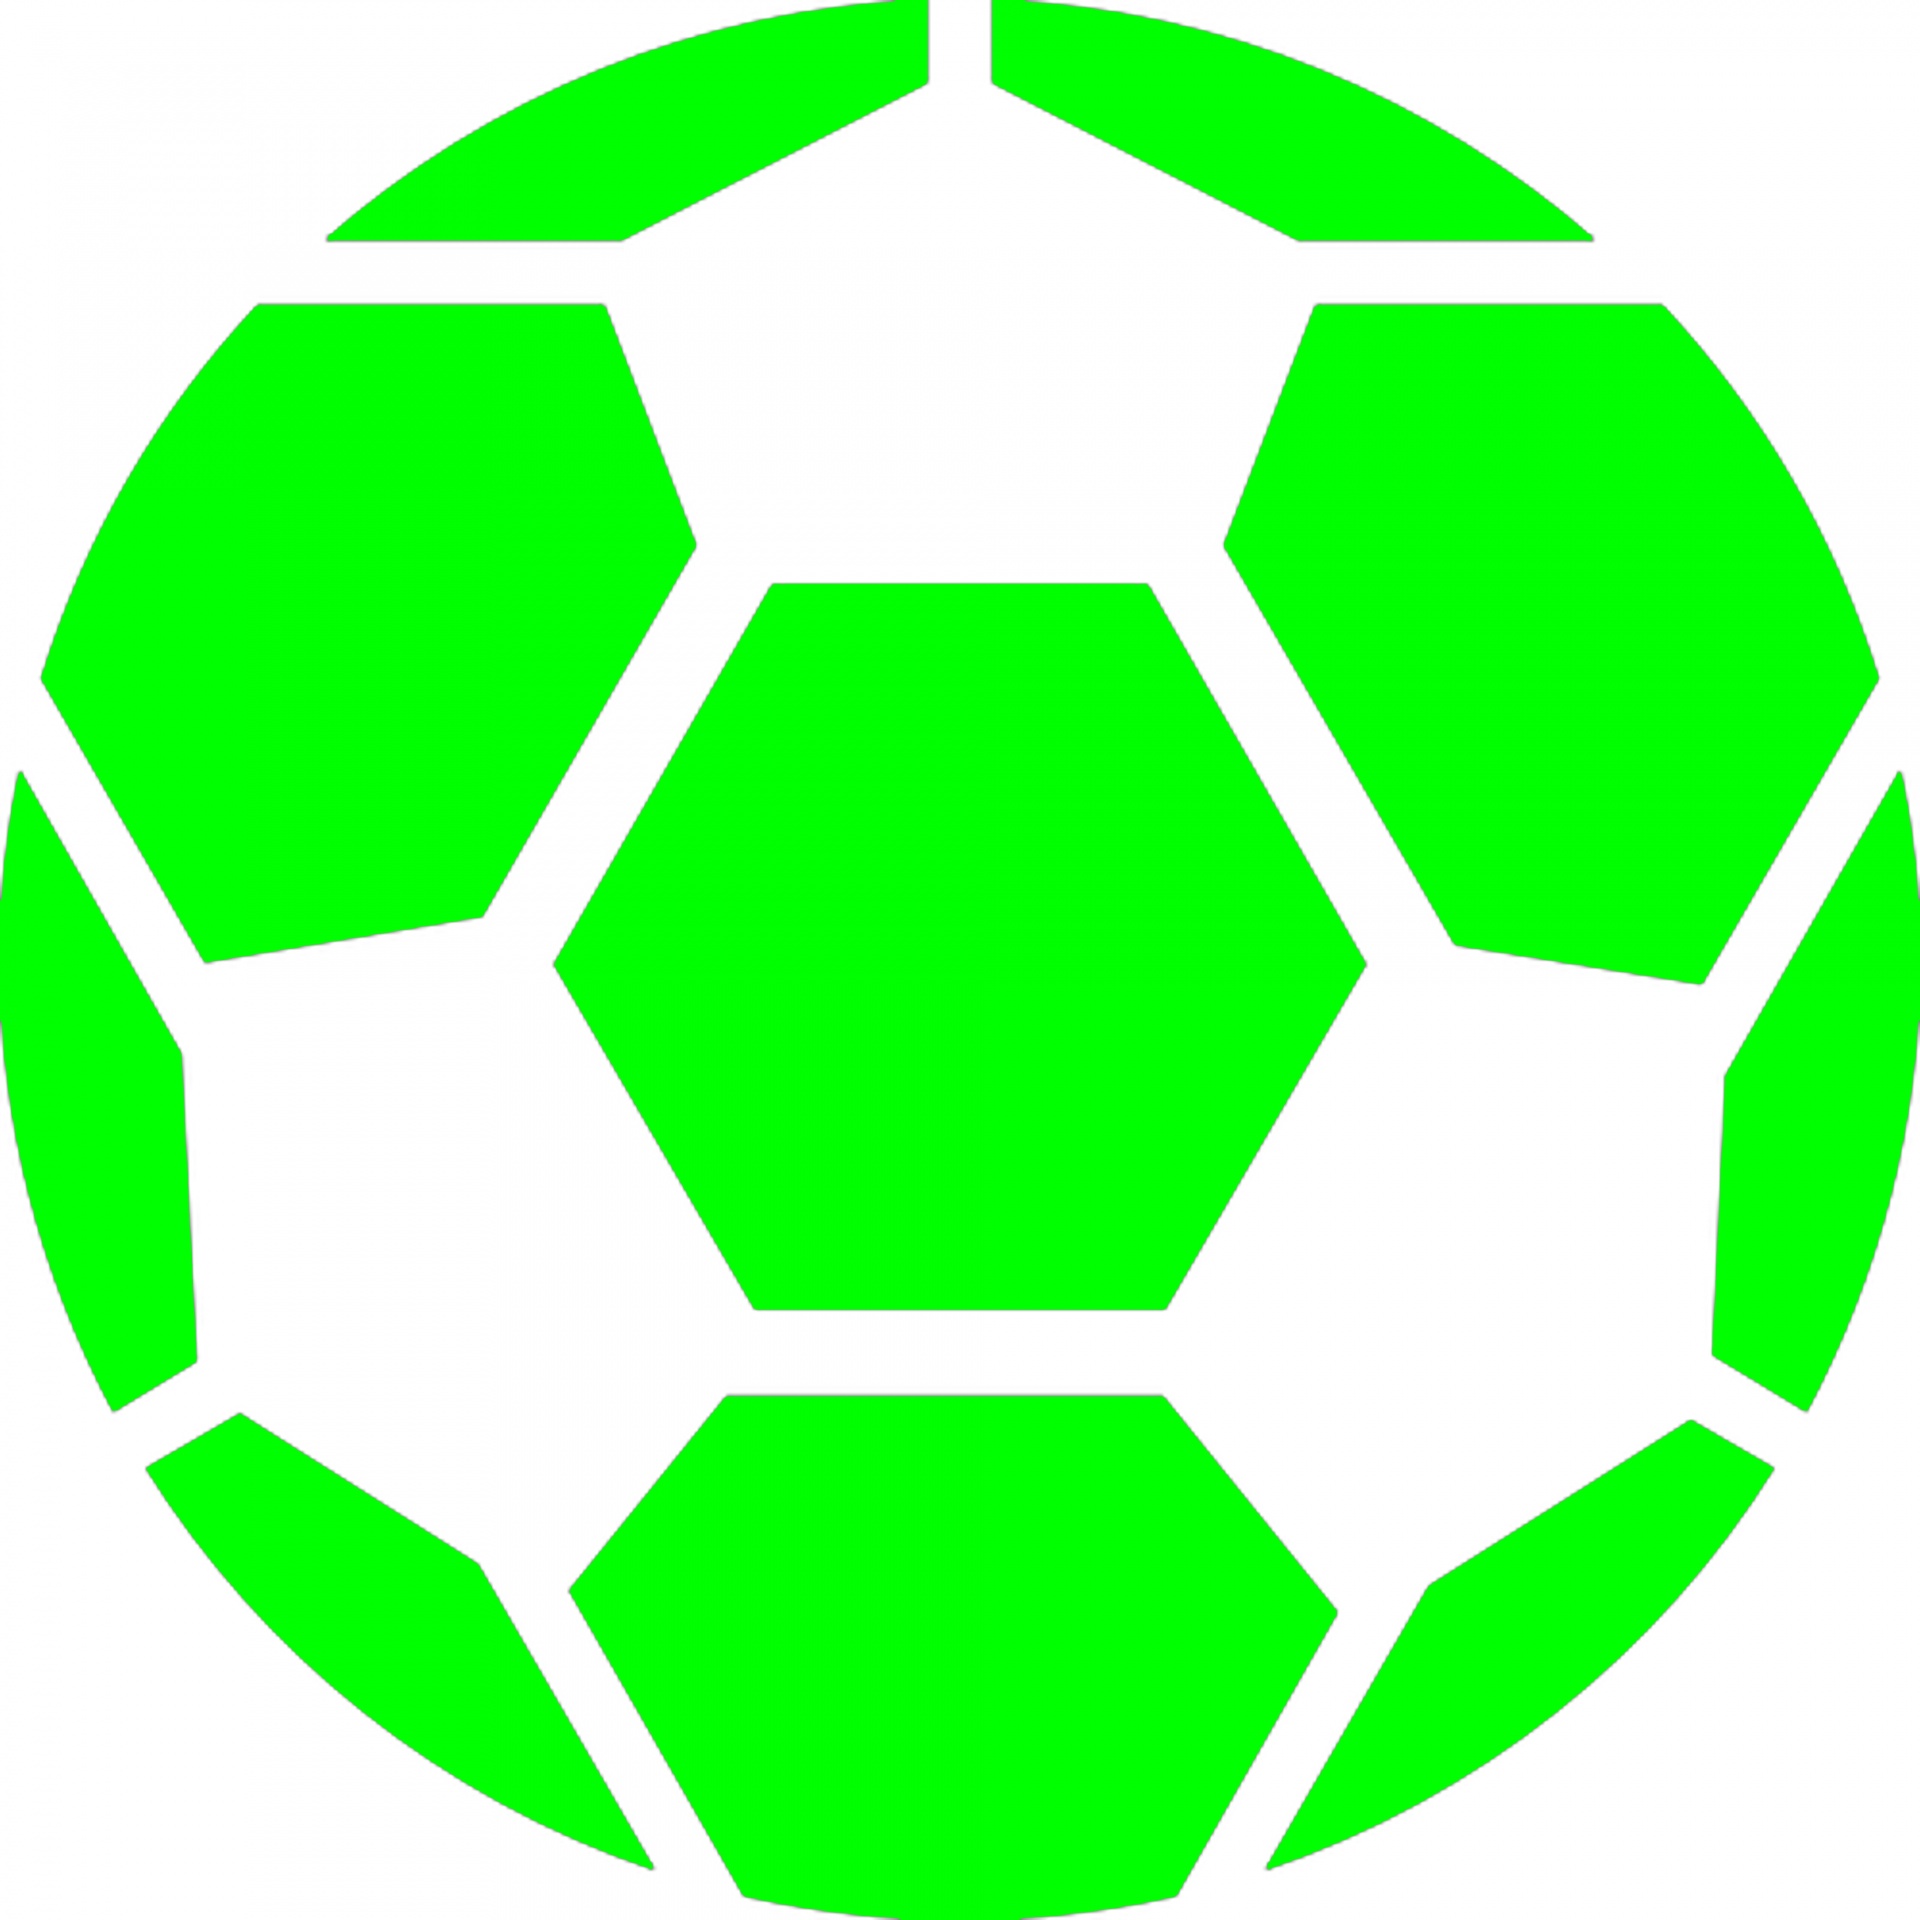 Green,soccer,ball,football,isolated